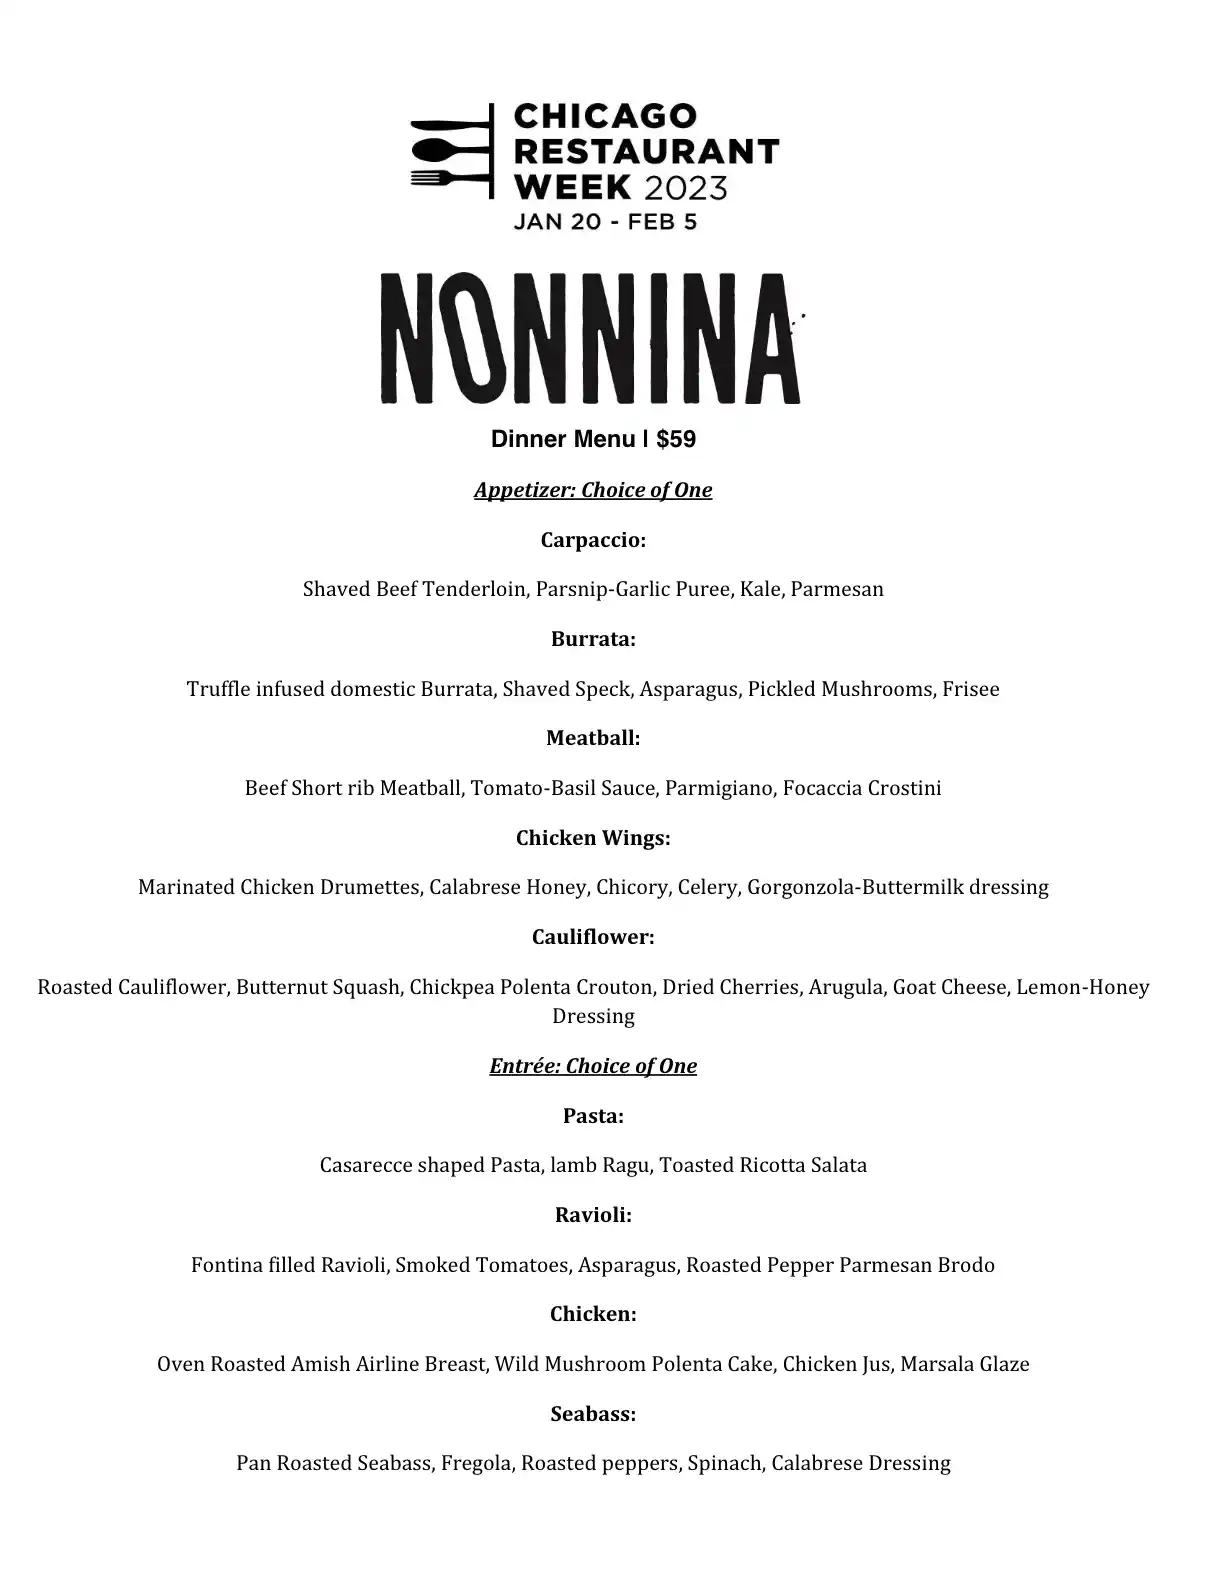 Chicago Restaurant Week 2023 Menu Nonnina Dinner